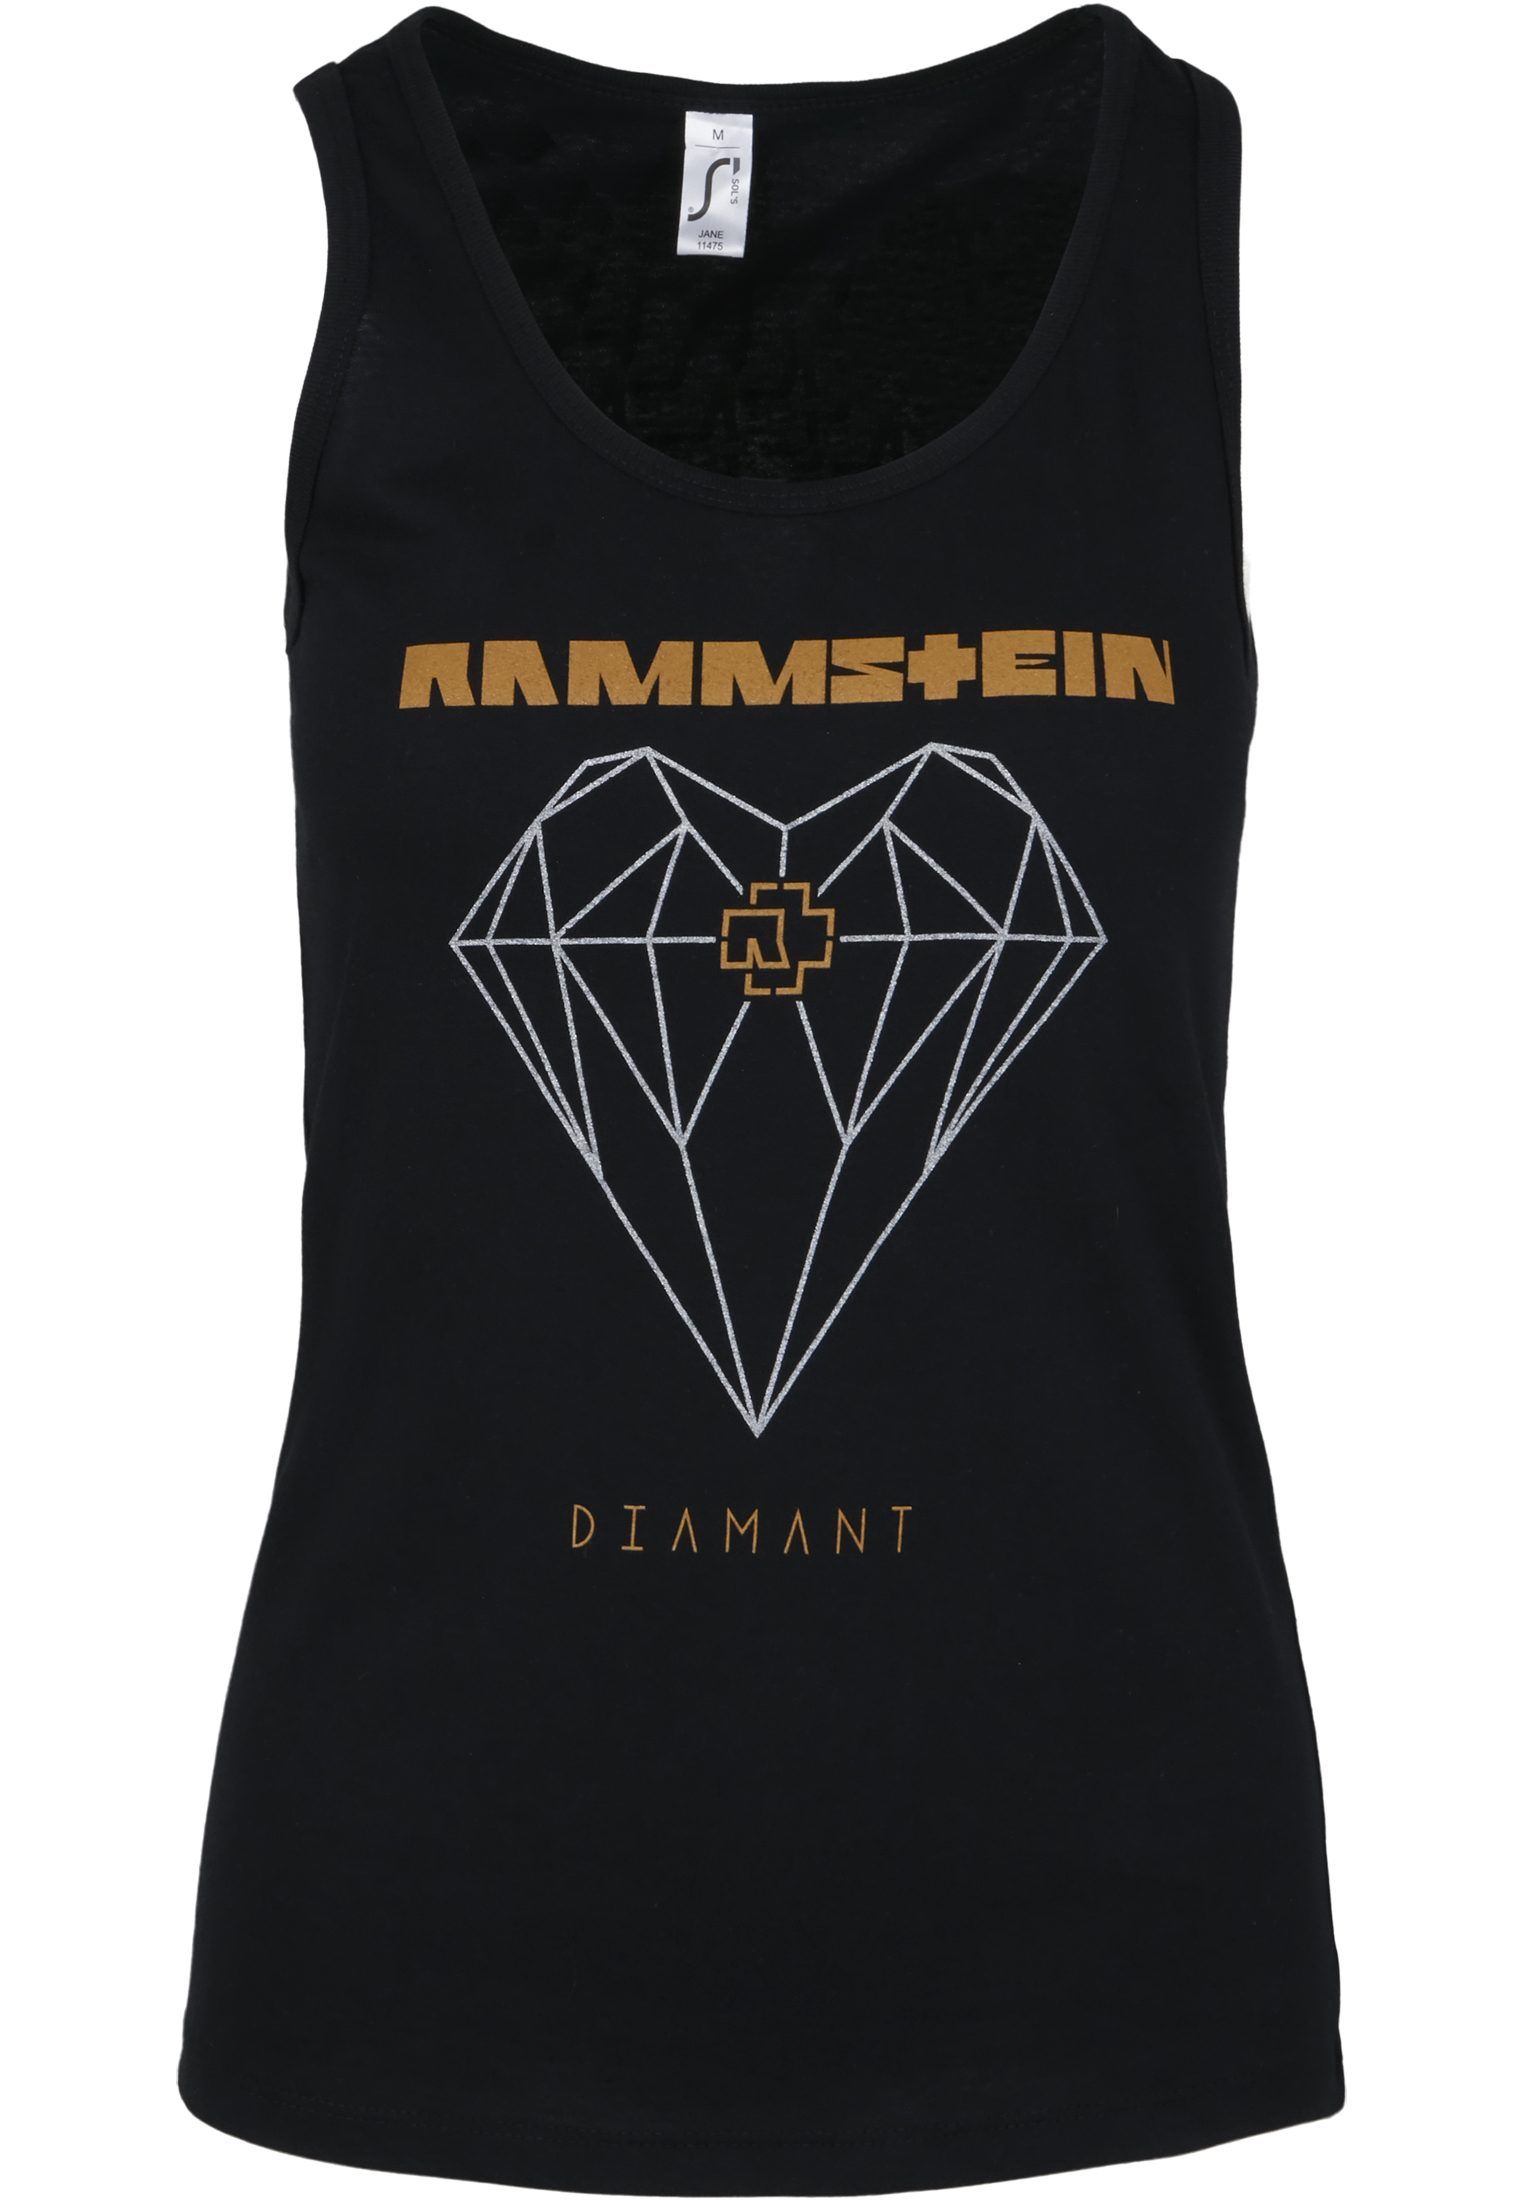 Show you View the Internet dump Ladies Rammstein Diamant Tanktop-RS017